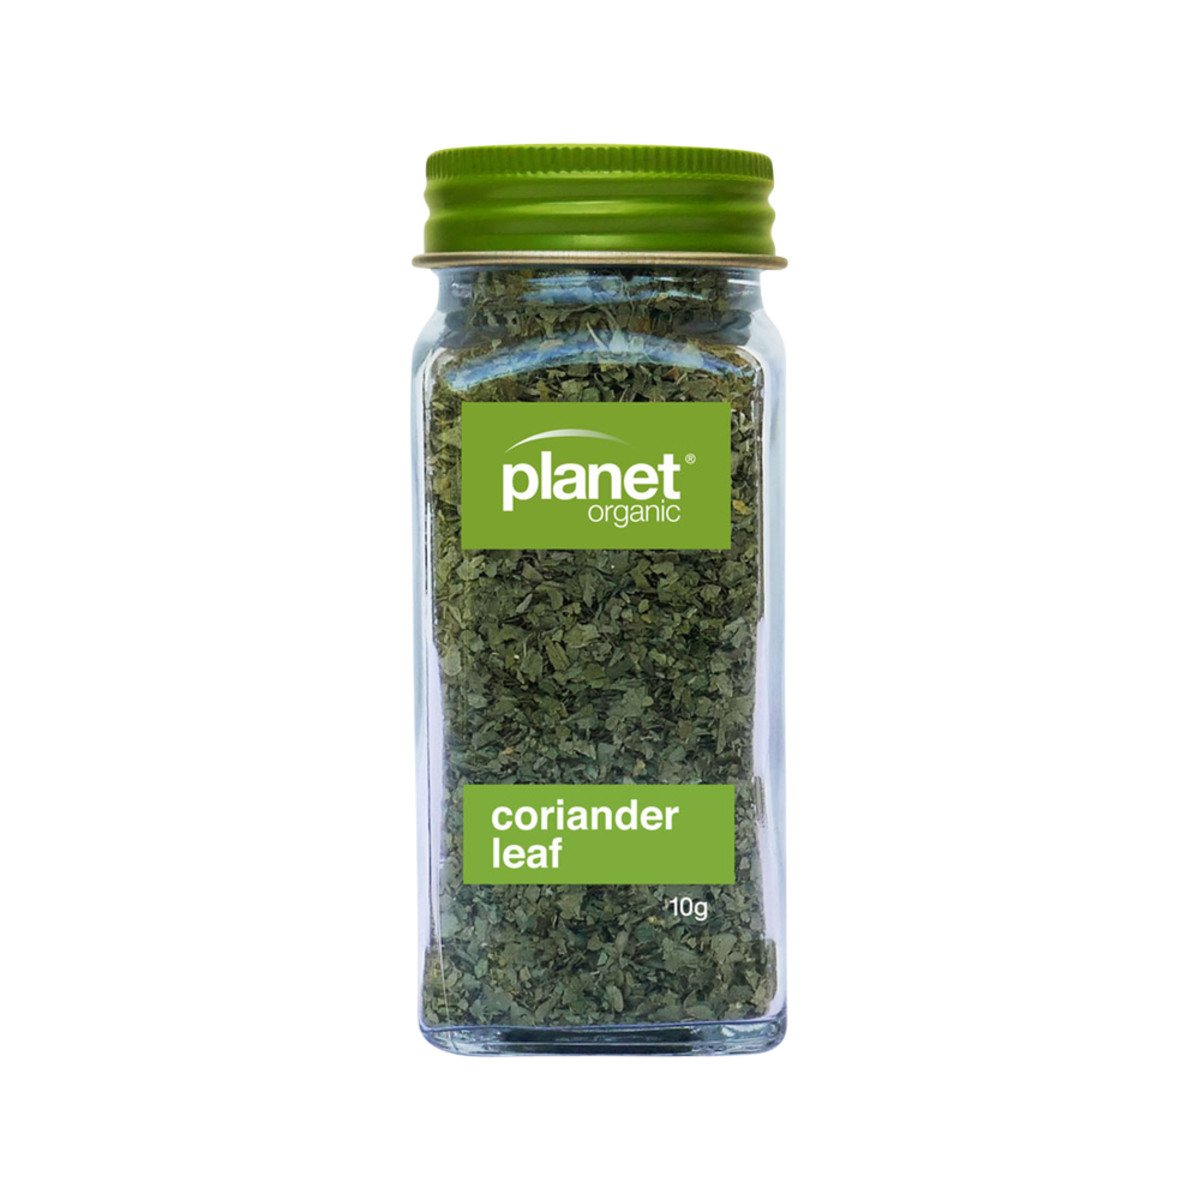 Planet Organic Organic Shaker Coriander Leaf 10g